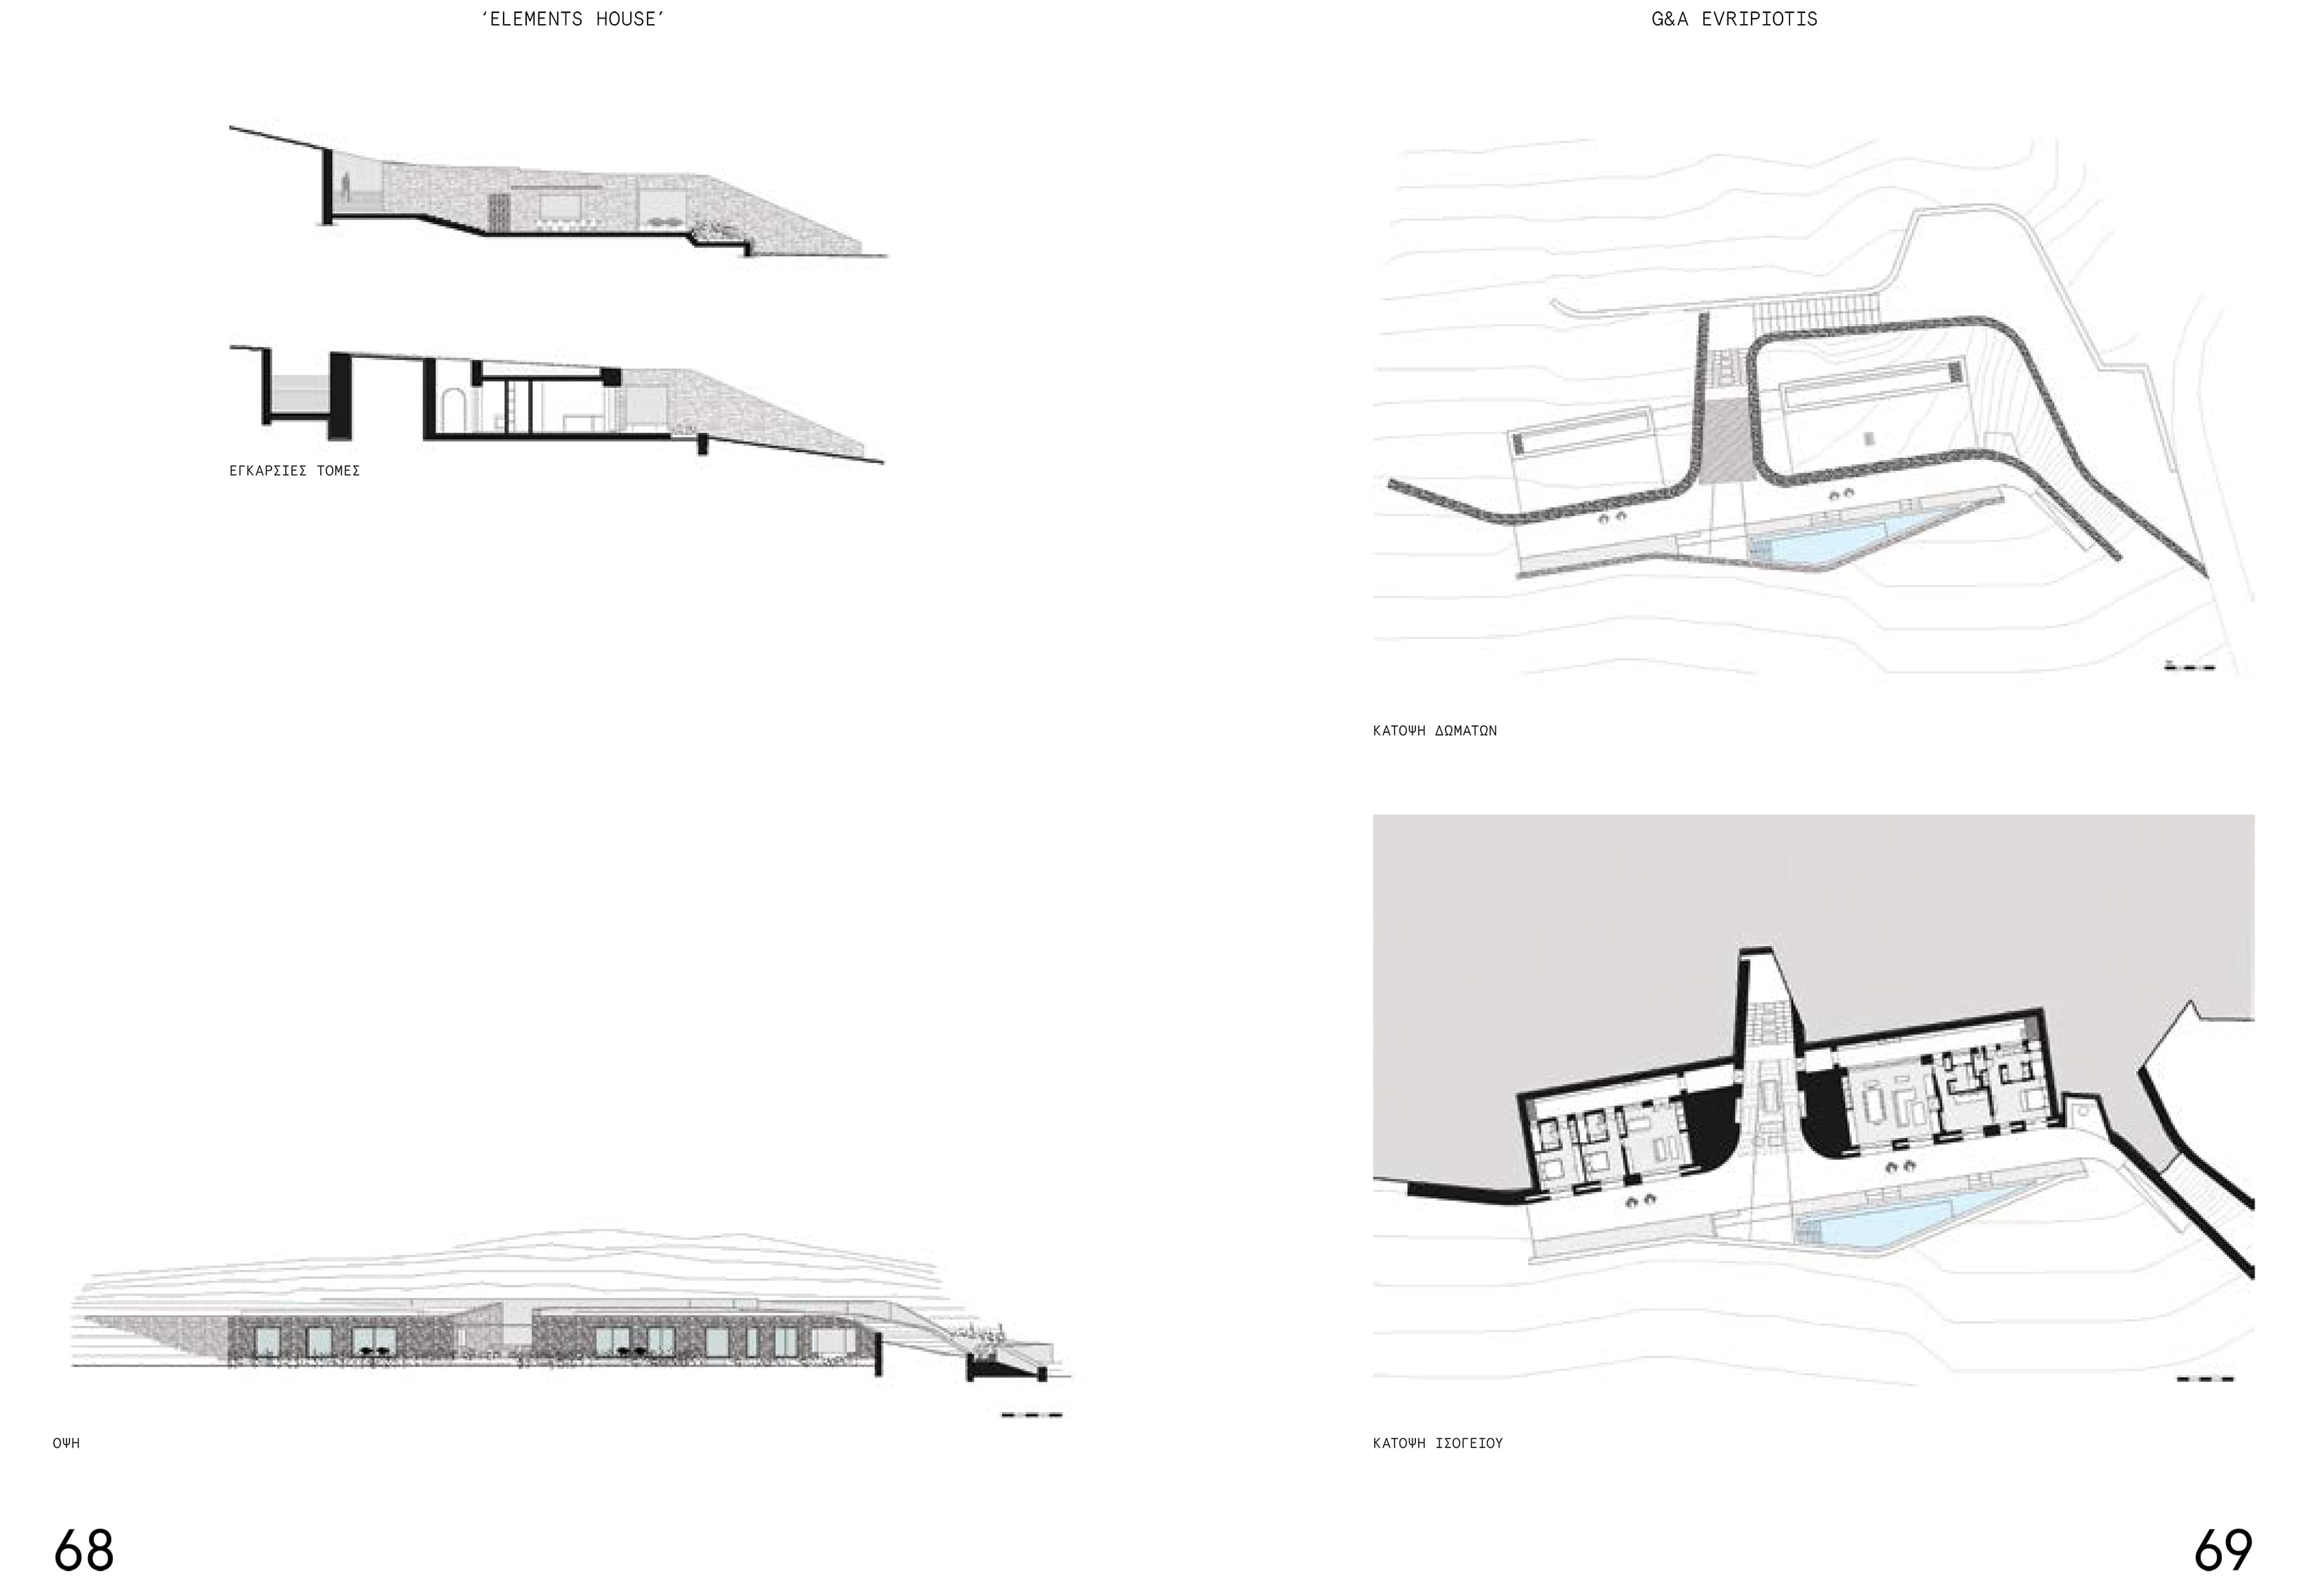 domes-163-elements-house-evripiotis-architects-04